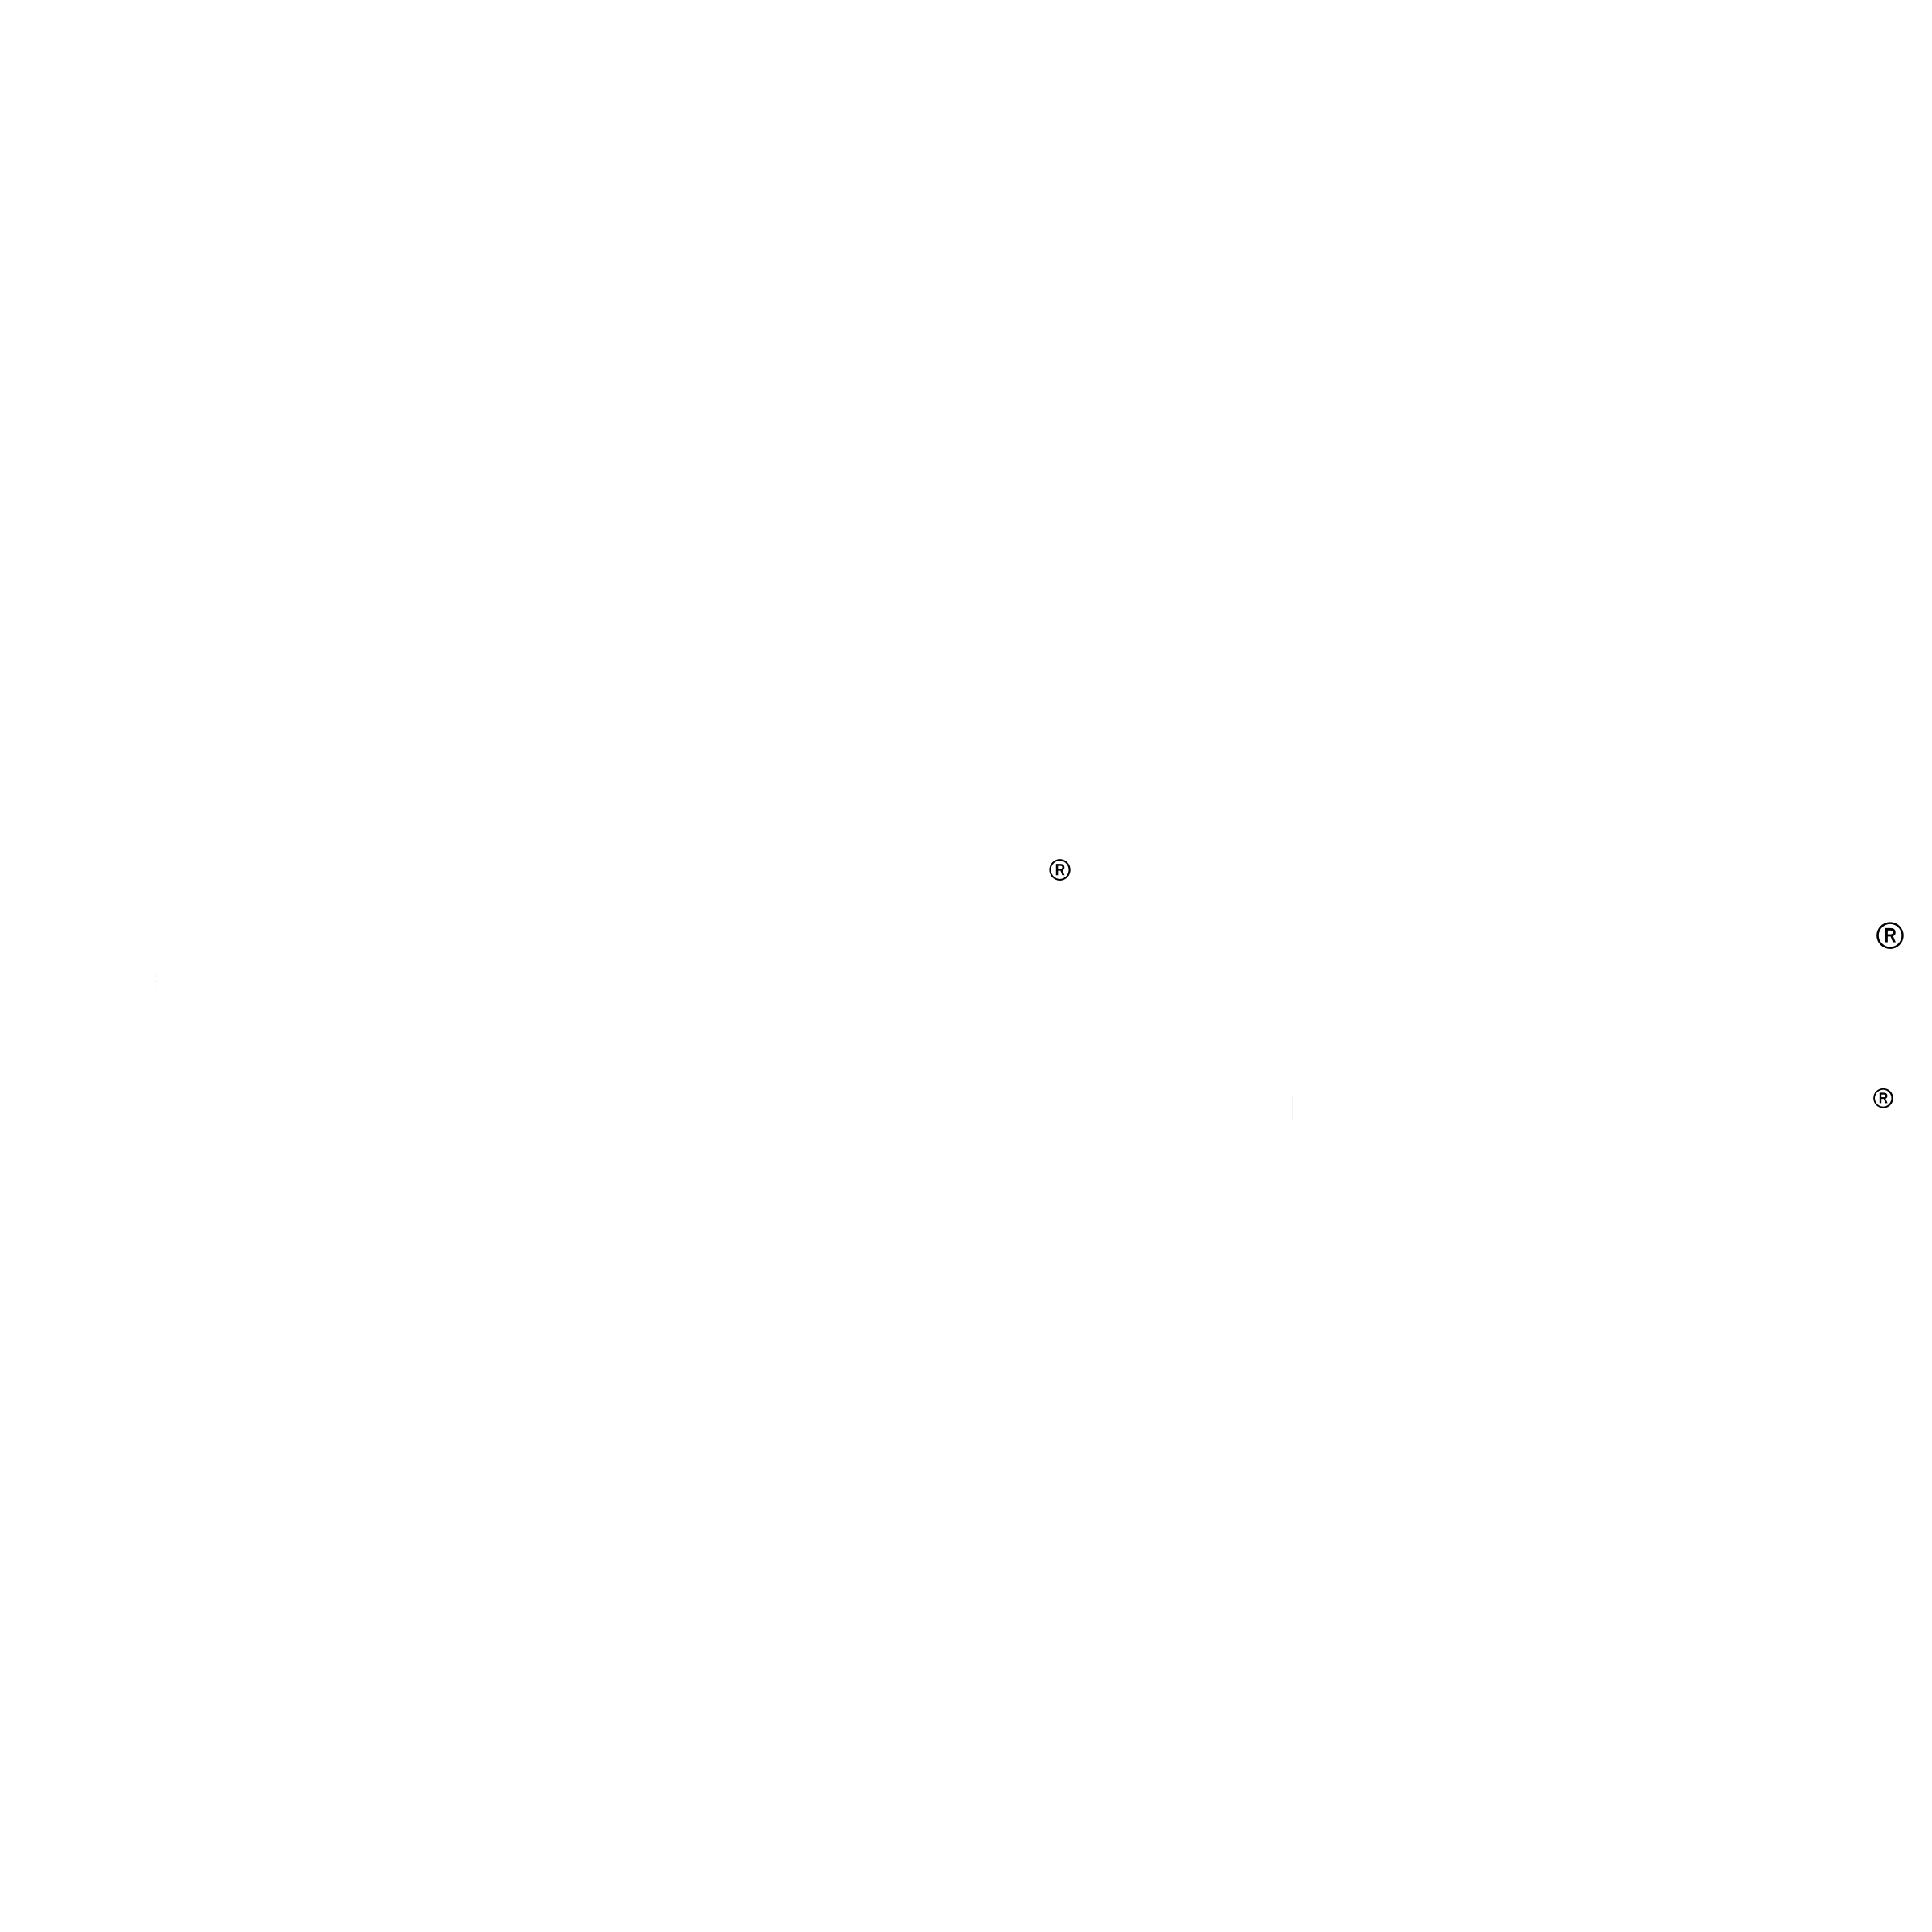 Holland America Logo - Holland America Logo PNG Transparent & SVG Vector - Freebie Supply